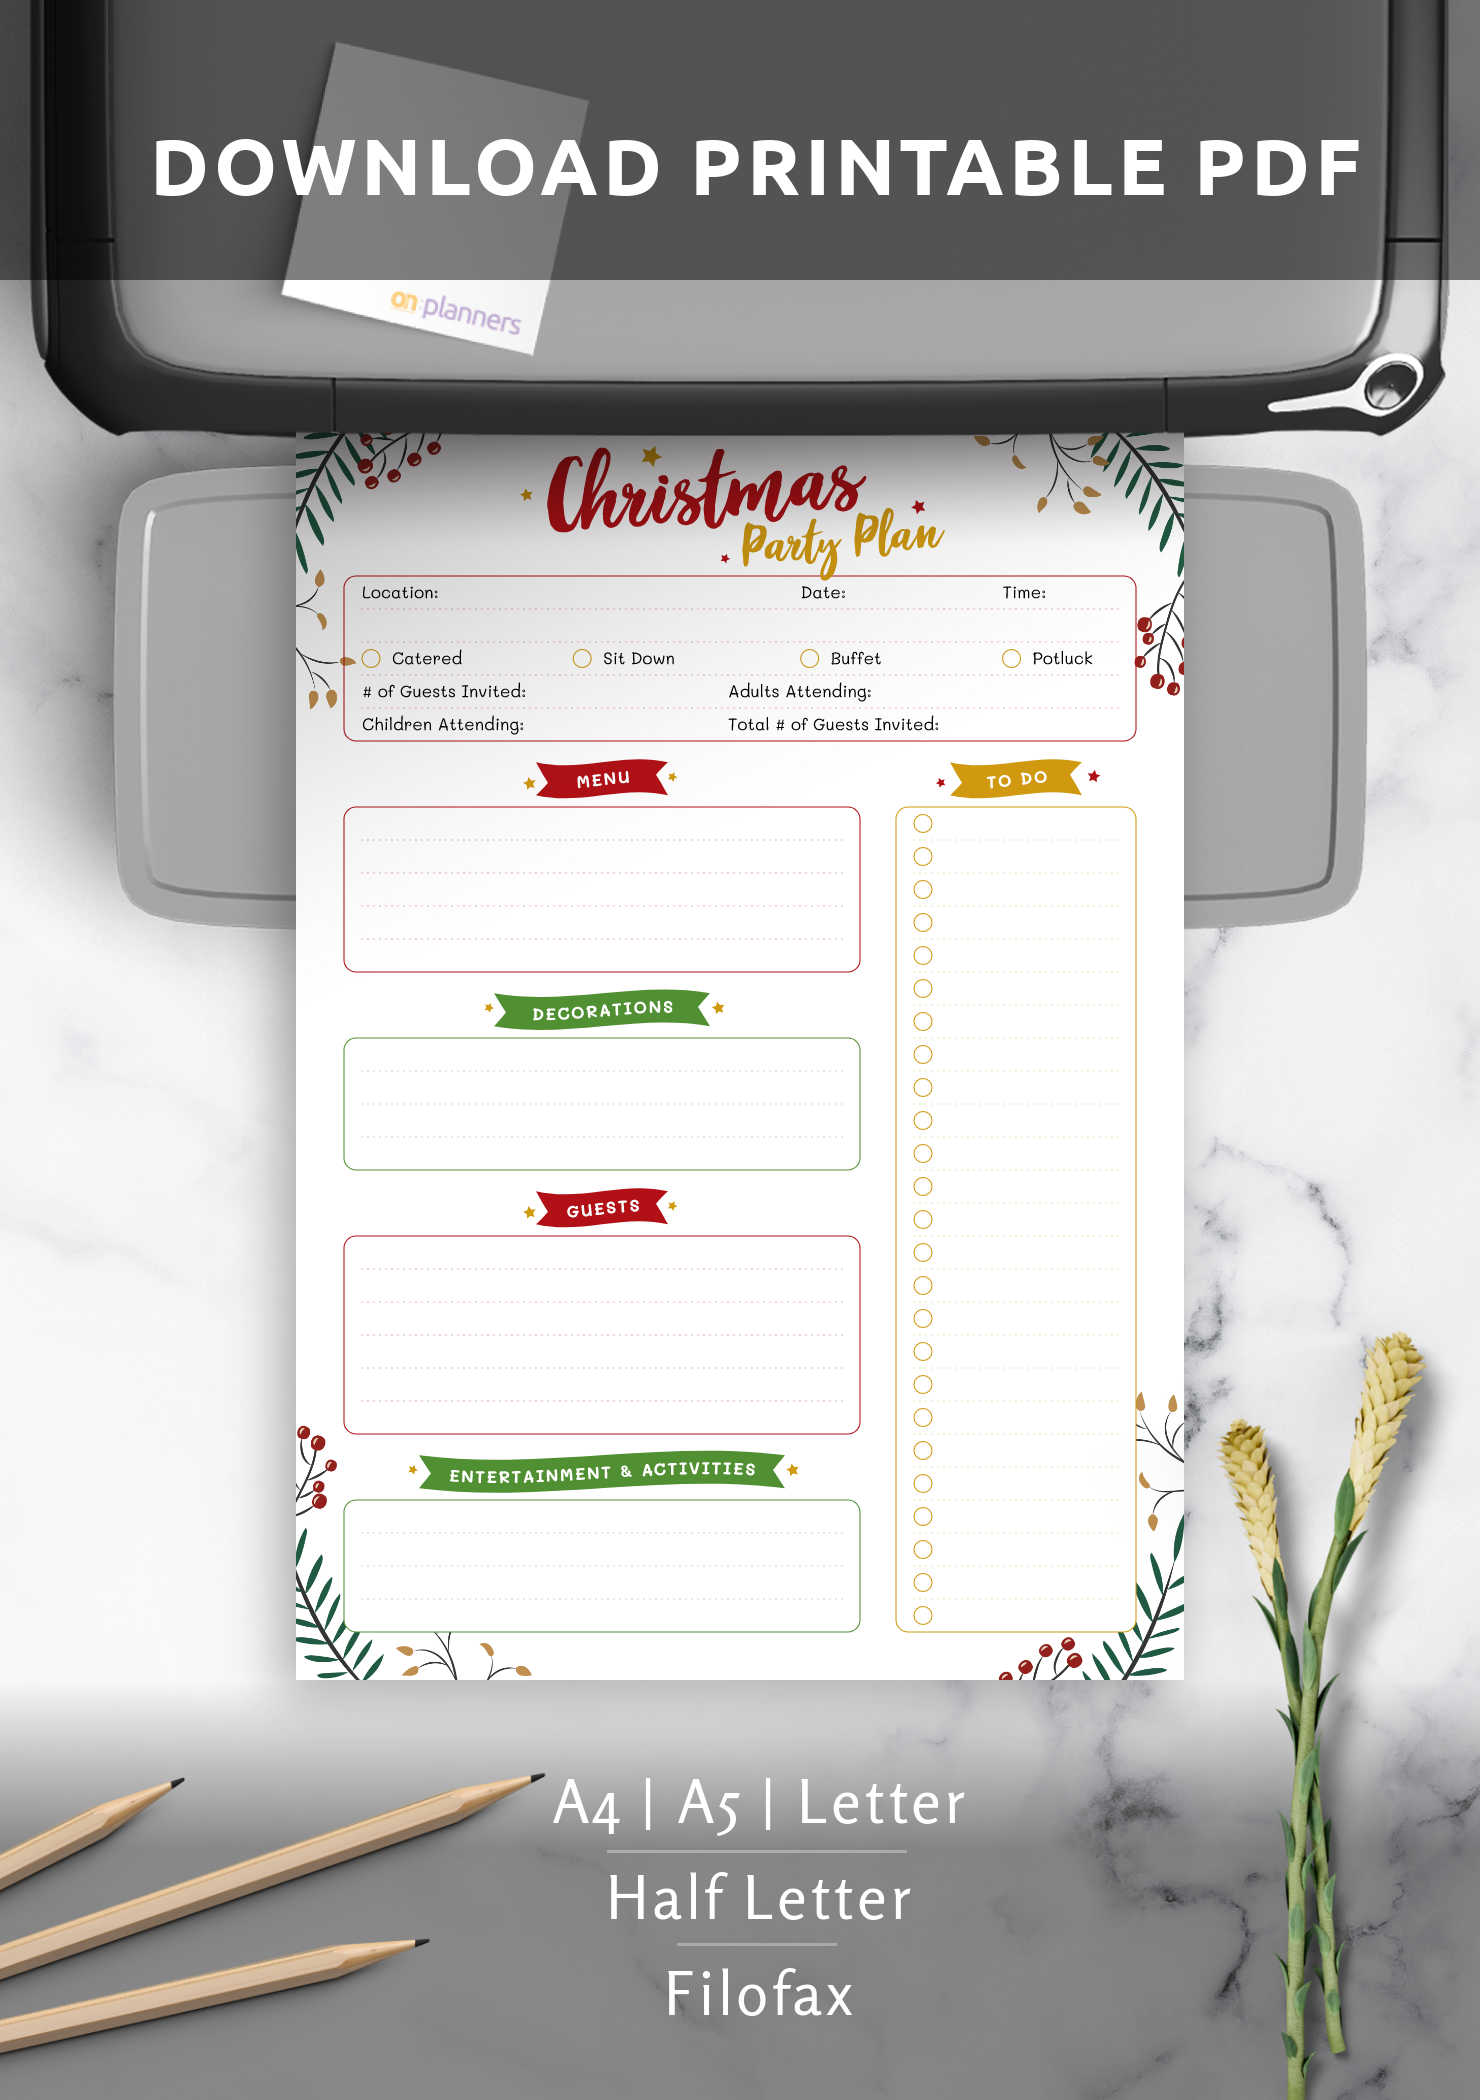 Download Printable Christmas Party Plan PDF